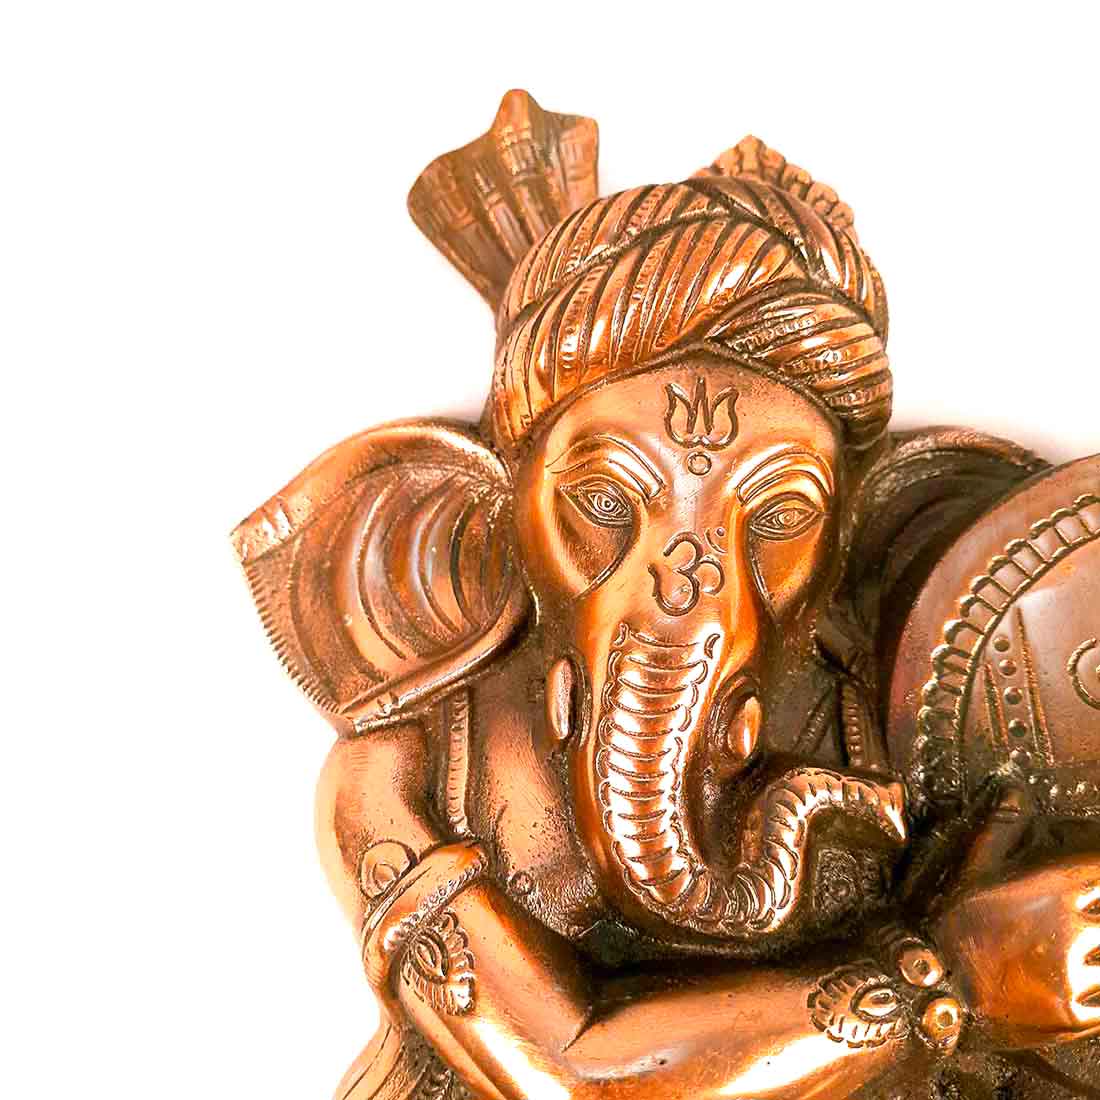 Ganesh ji Wall Hanging - Lord Ganesha Playing Dhapli Showpiece -14 Inch - ApkaMart